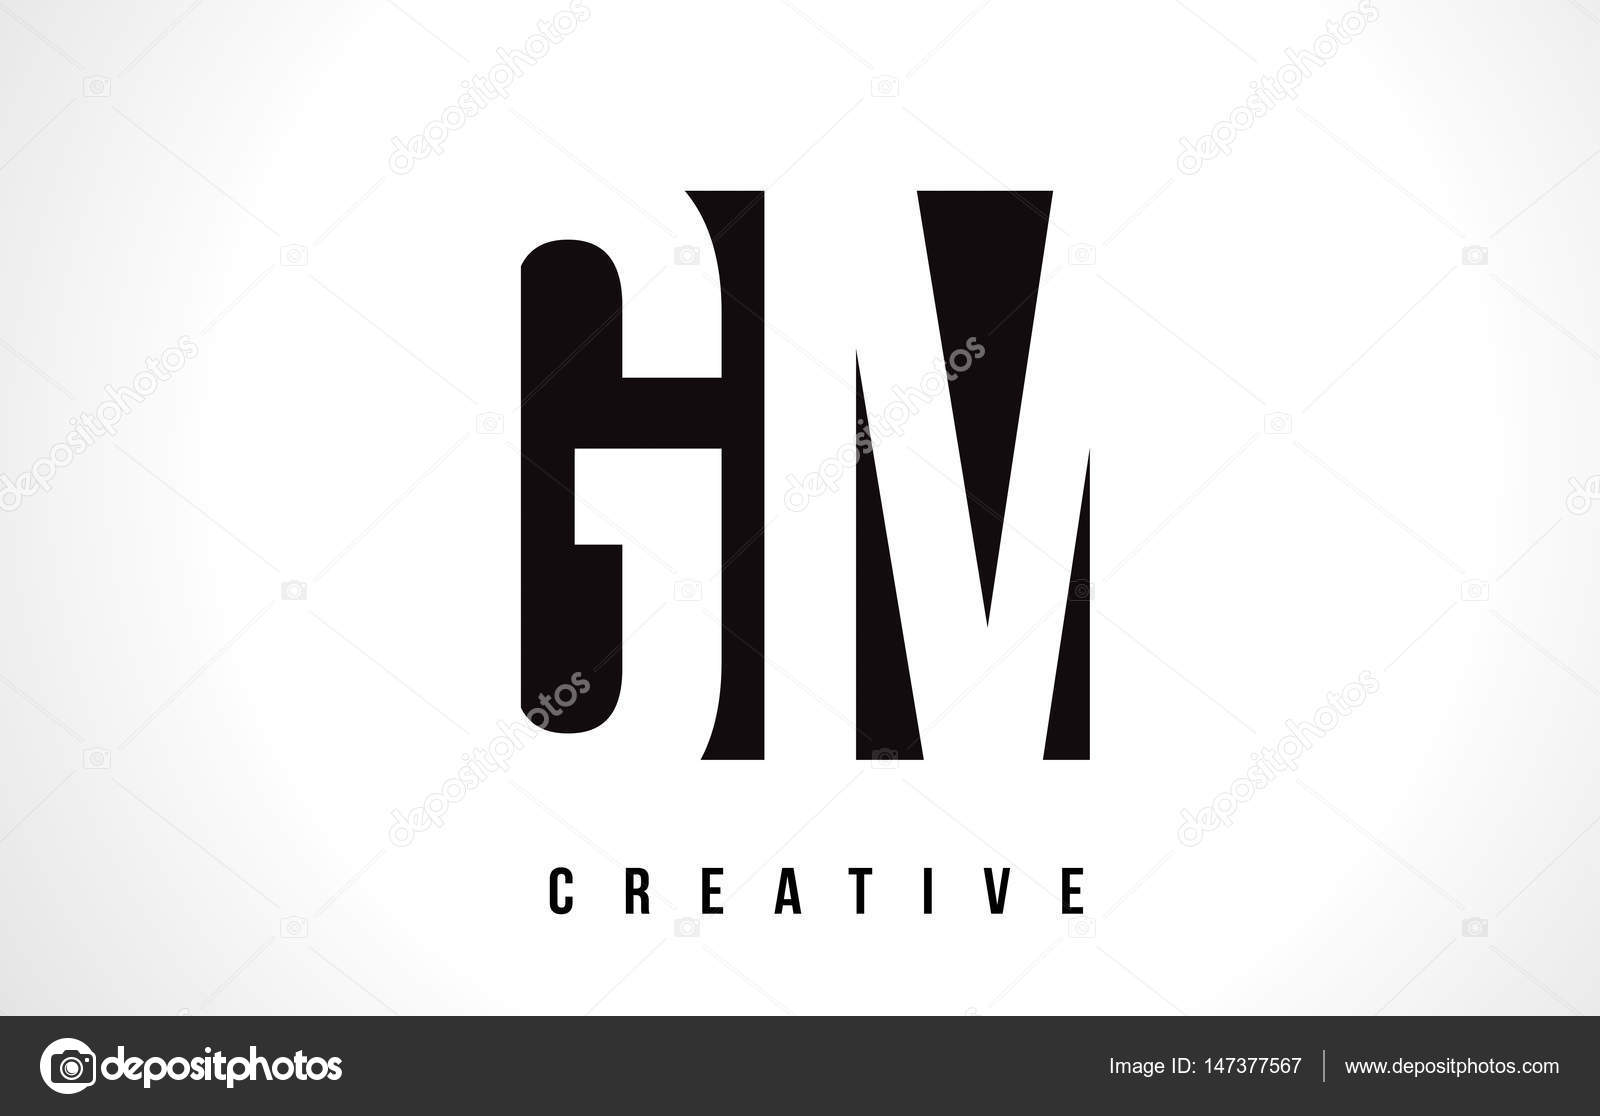 Gm modern letter logo design with swoosh Vector Image